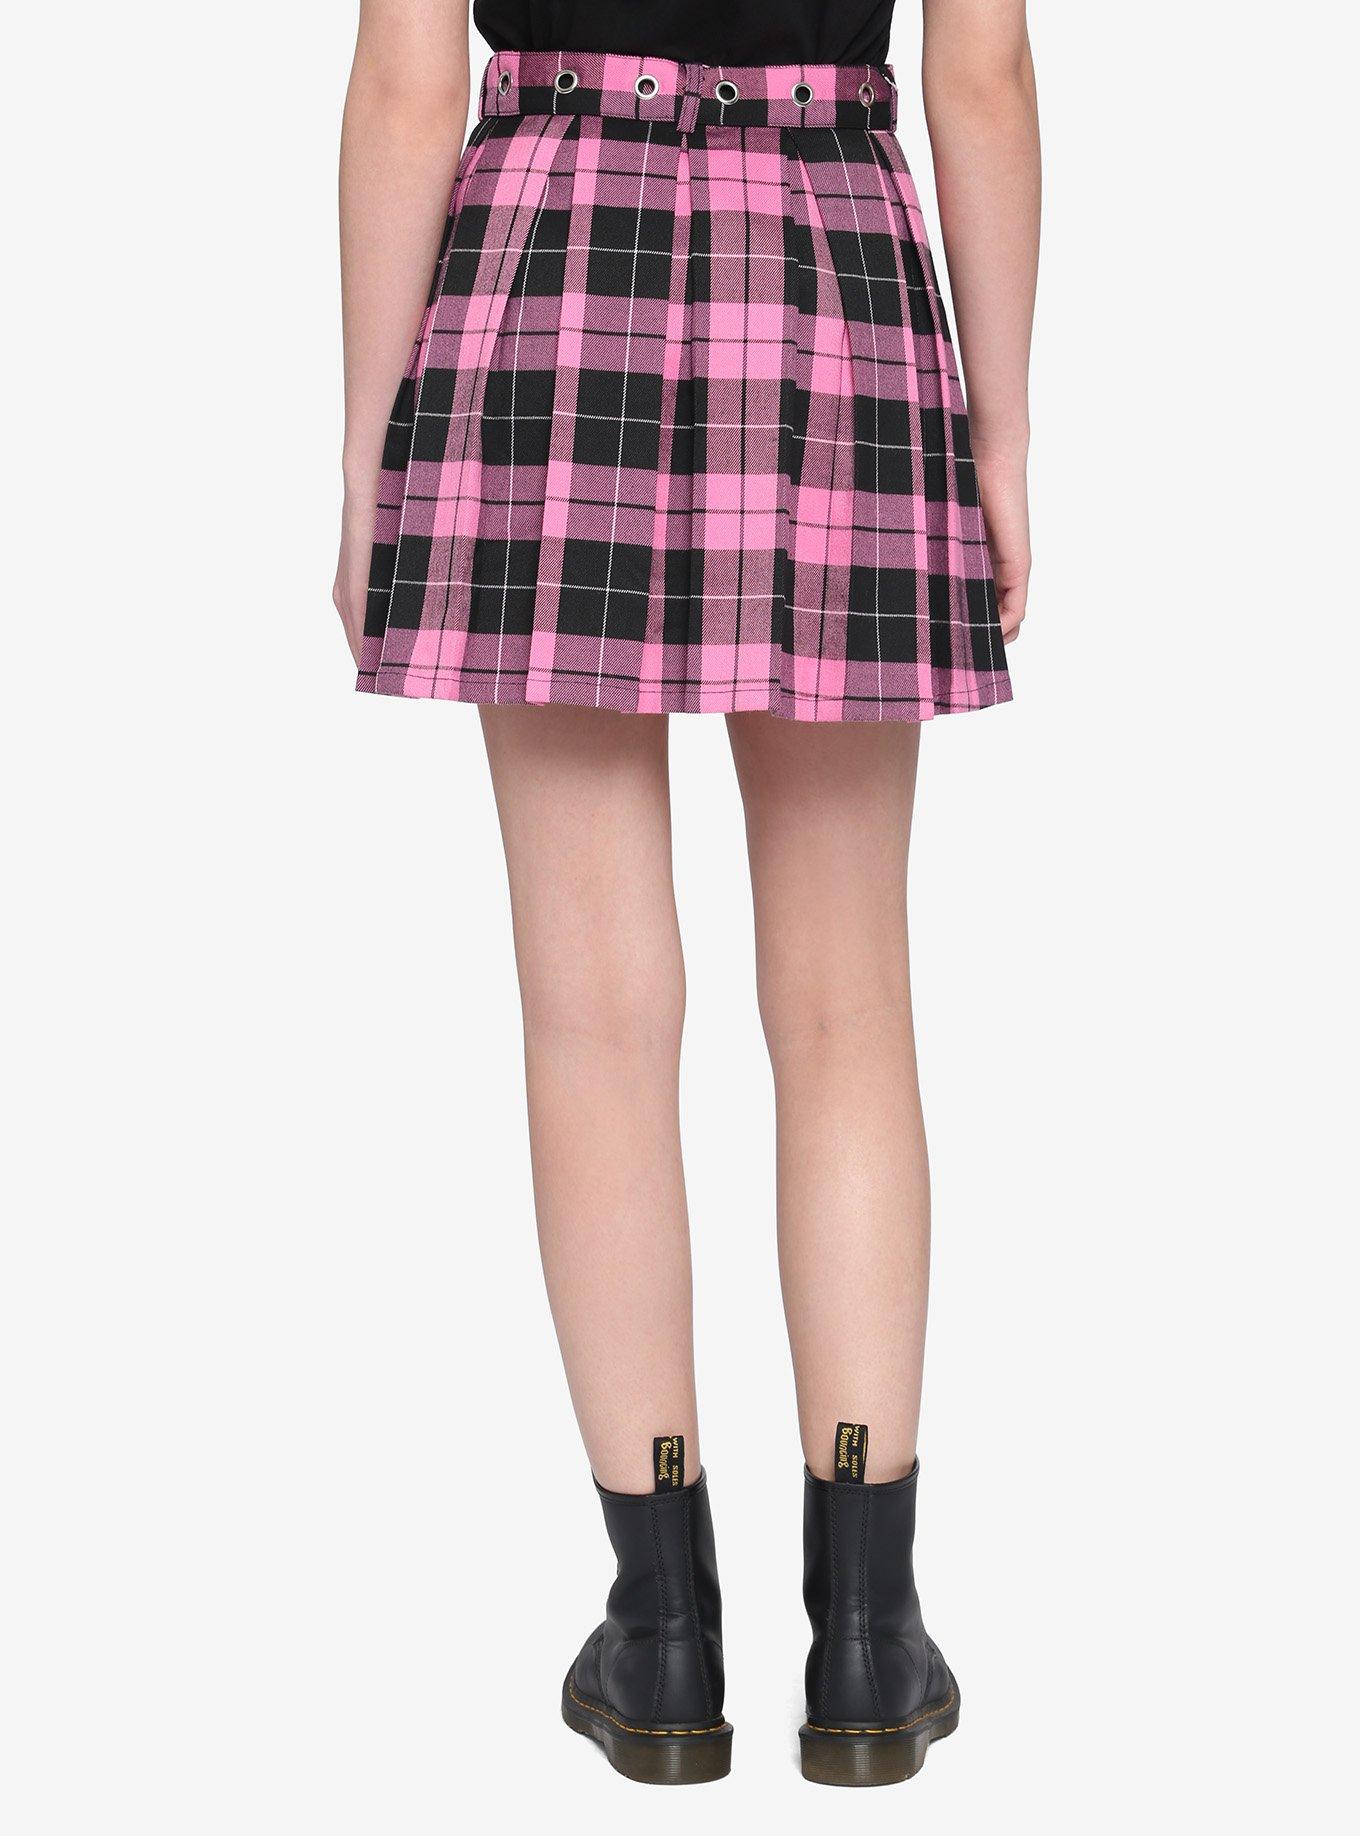 Pink & Black Plaid Skirt With Grommet Belt, PLAID - PINK, alternate